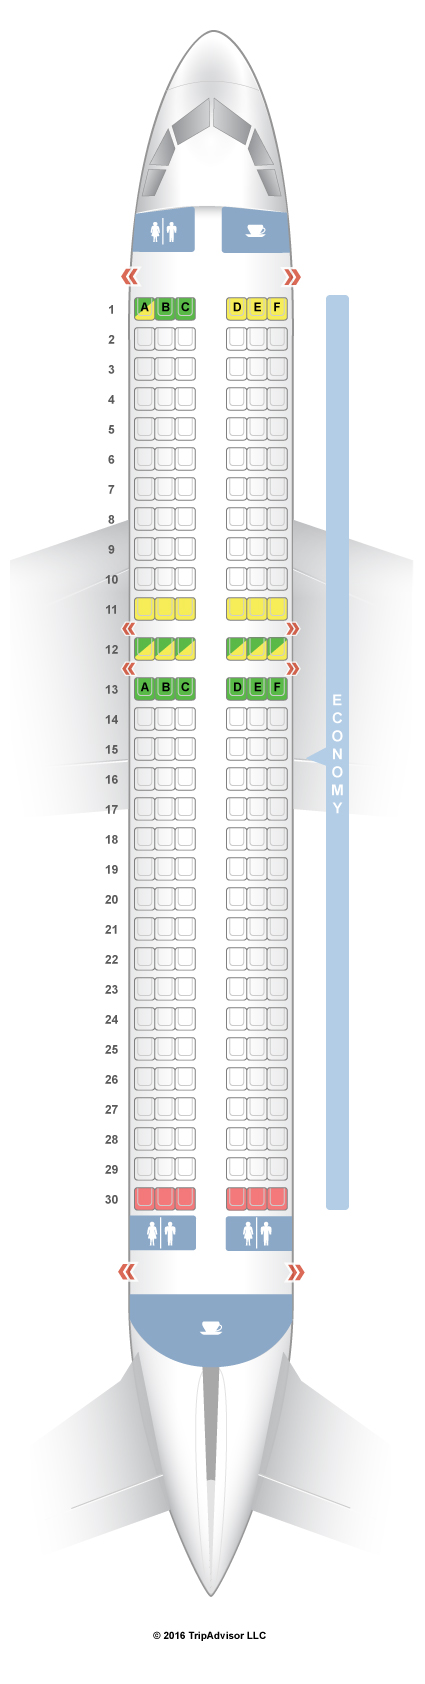 46++ Jetstar seating plans